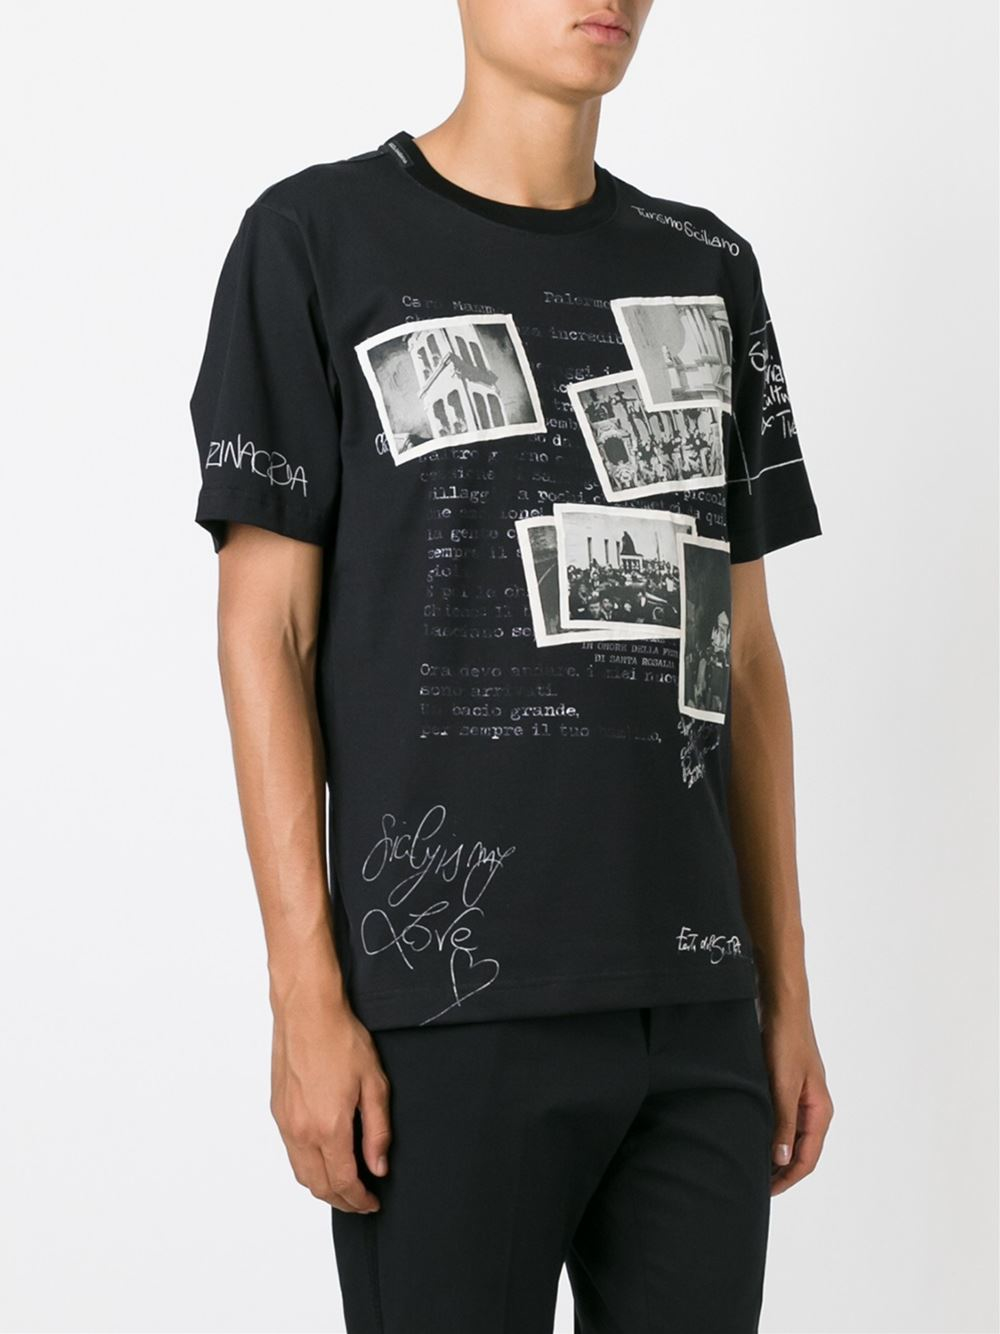 Dolce & Gabbana Denim Postcard Print T-shirt in Black for Men - Lyst